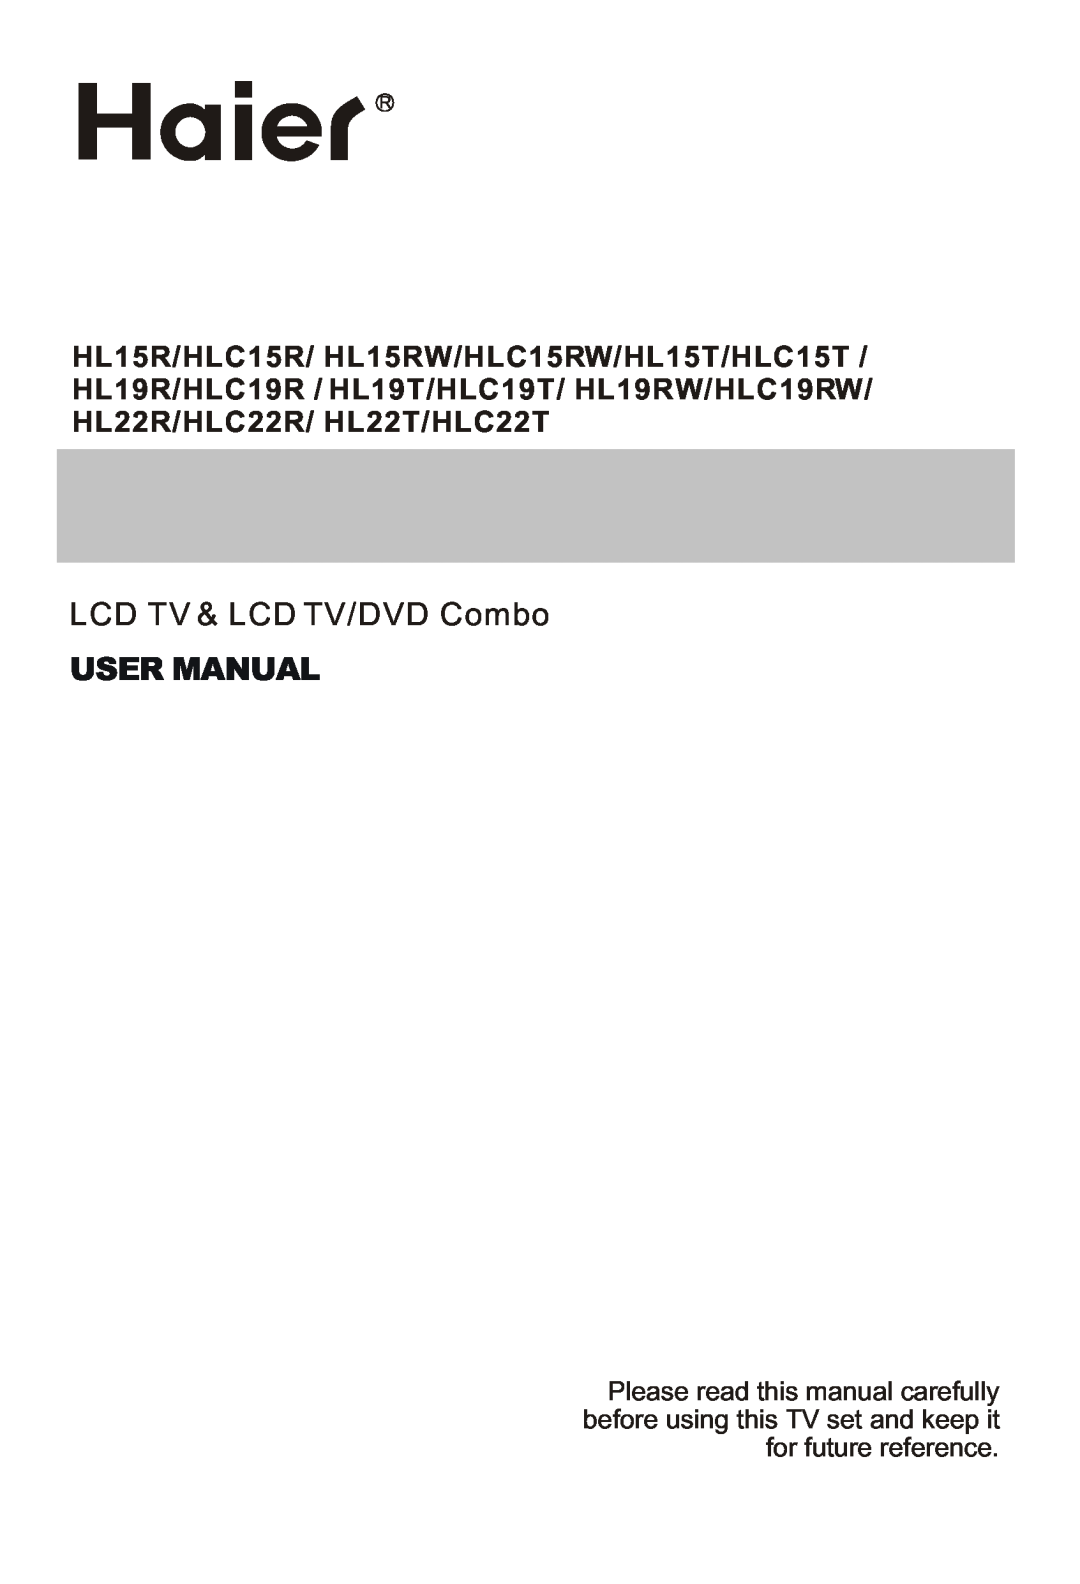 Haier HLC22R, HLC22T, HL15RW, HL19RW, HLC19RW, HLC15RW, HL15T, HL22T, HL22R user manual LCD TV & LCD TV/DVD Combo, User Manual 